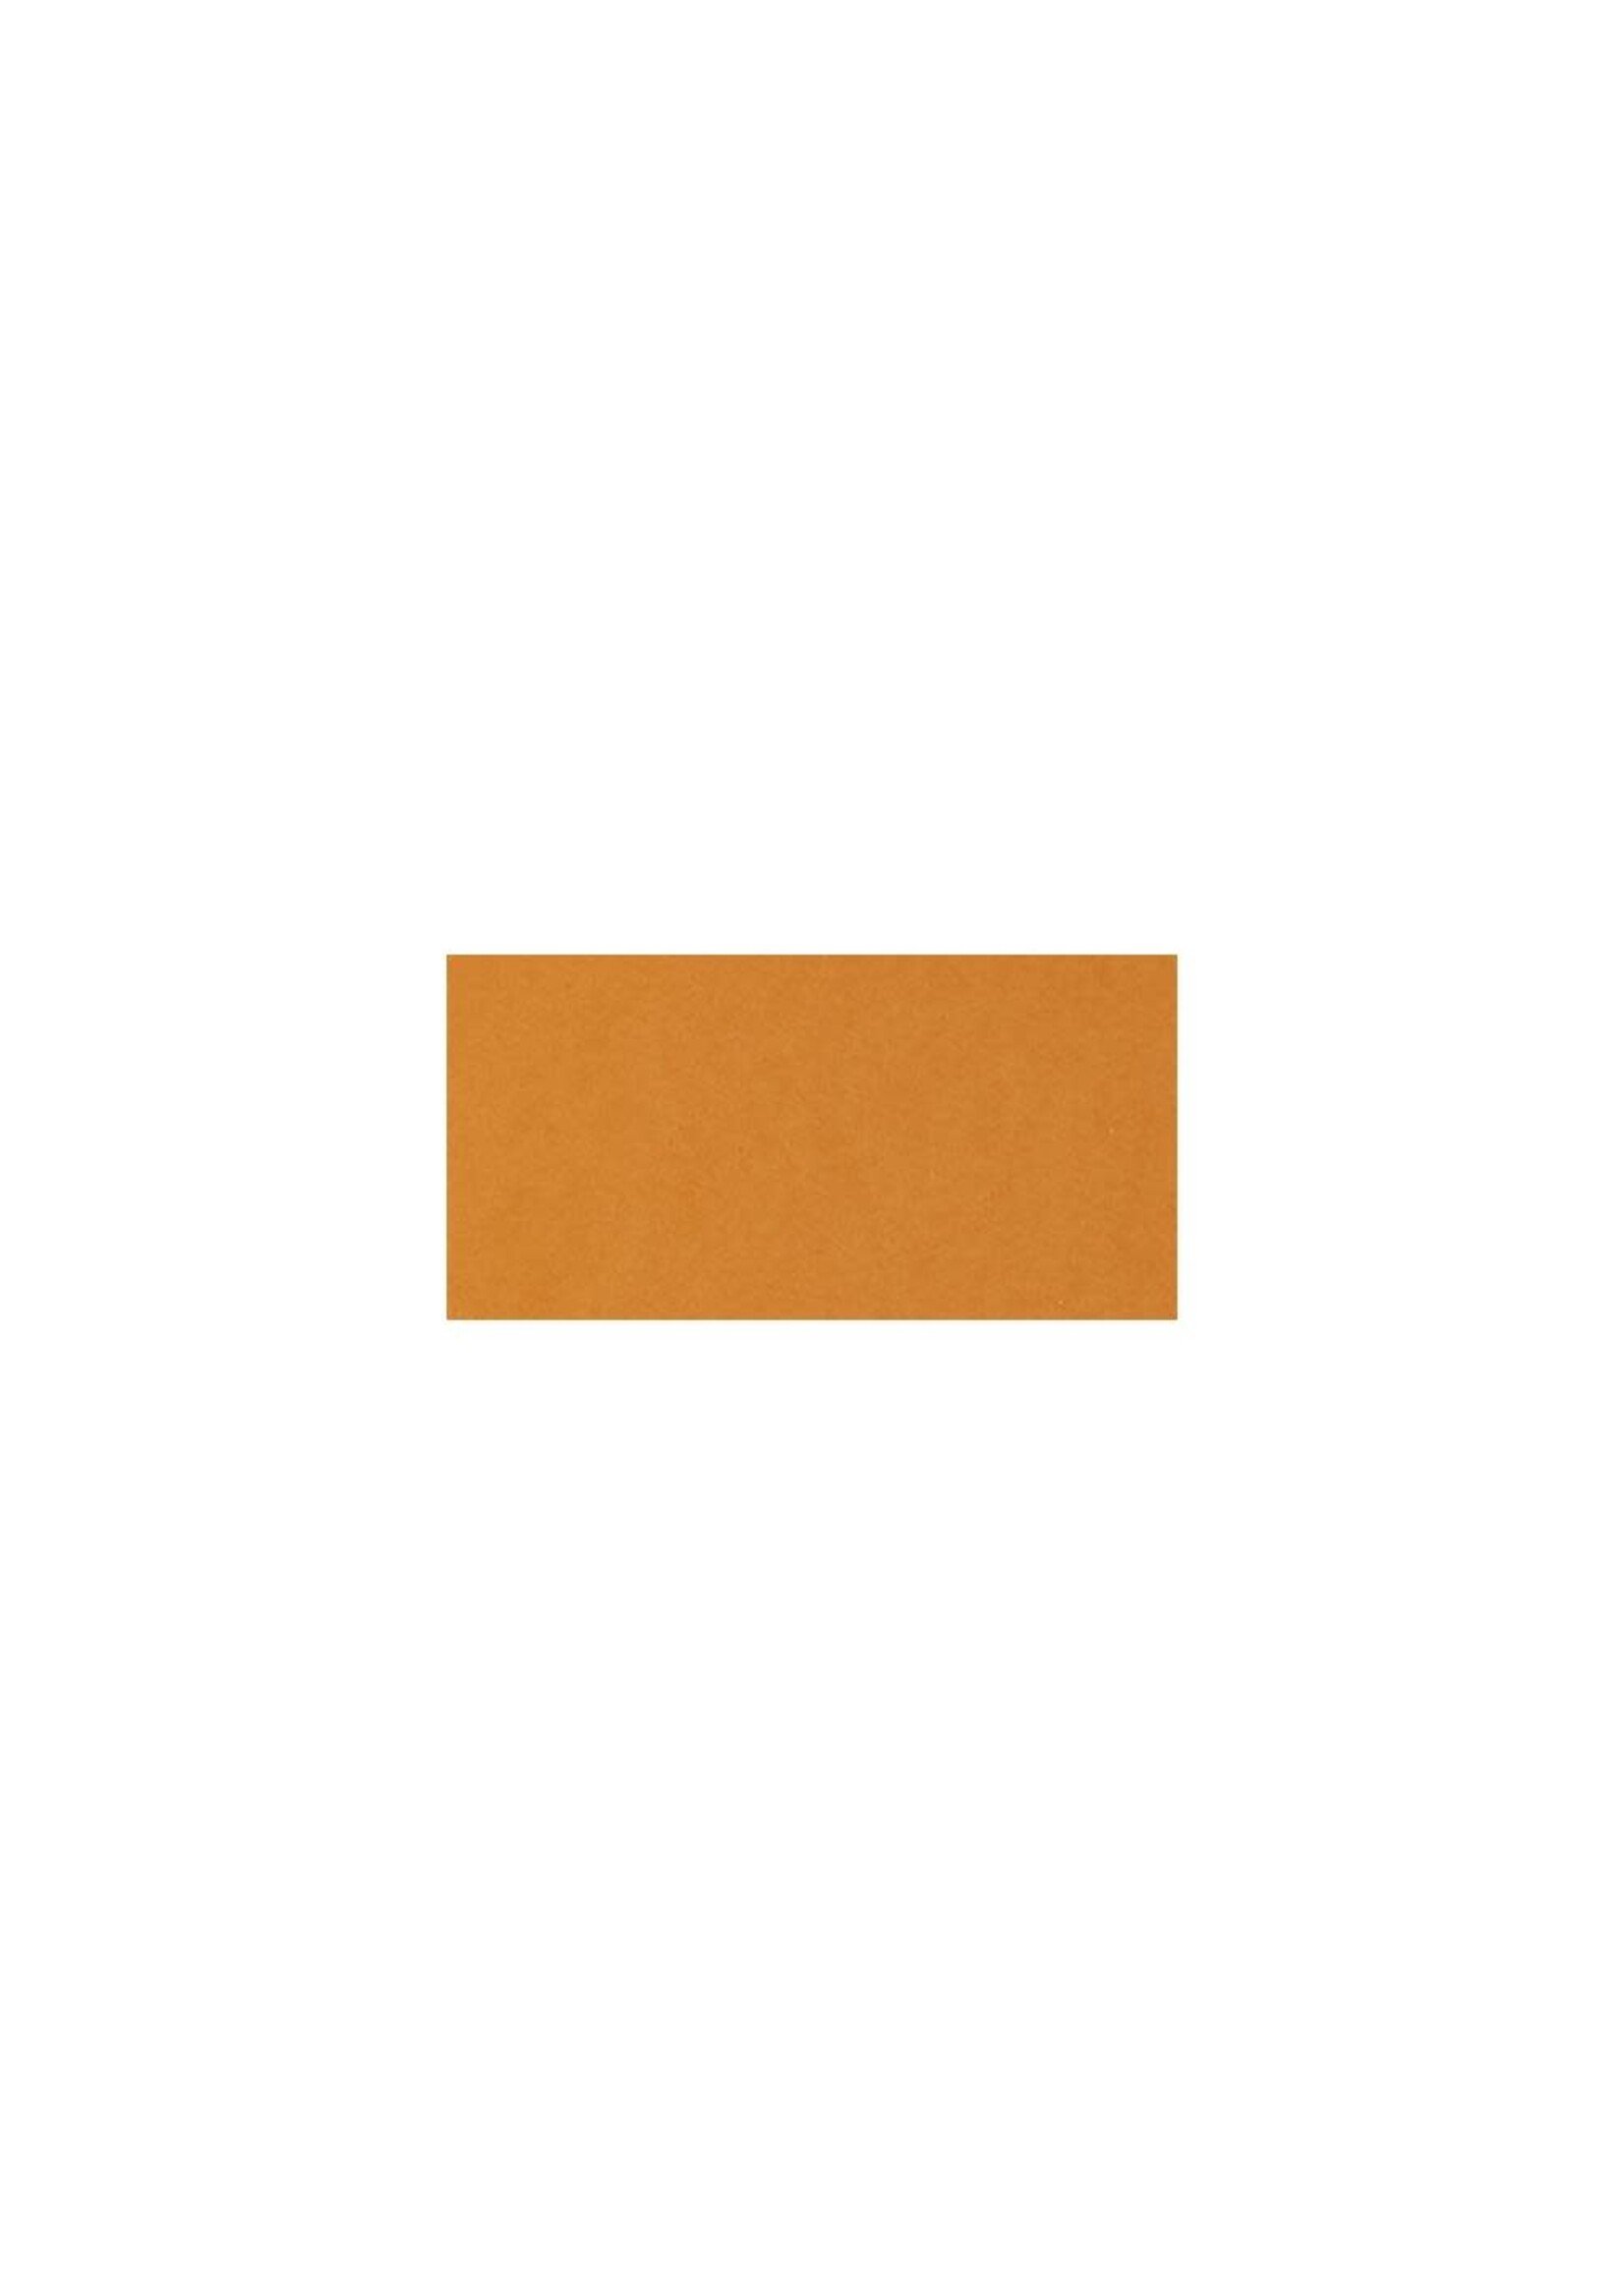 SPELLBINDERS PAPERCRAFTS, INC Color Essentials Cardstock 8.5 x 11 - Persimmon